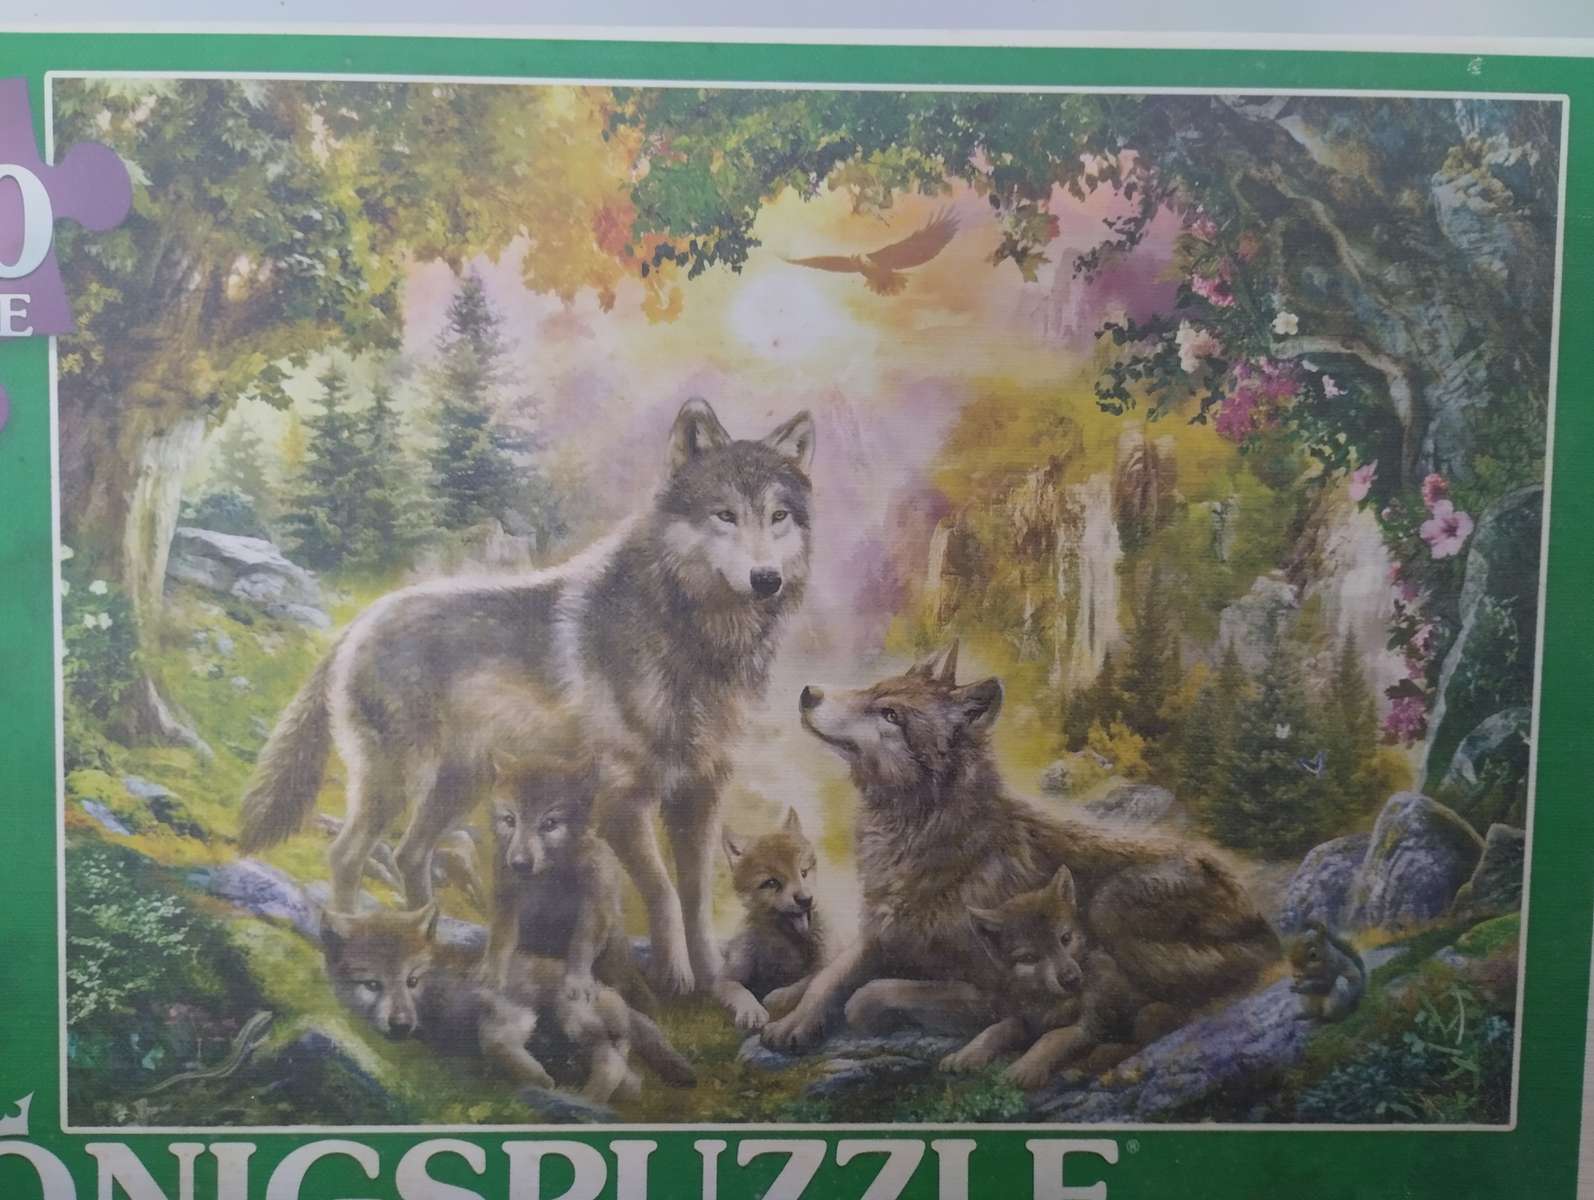 Lobos em puzzle online a partir de fotografia